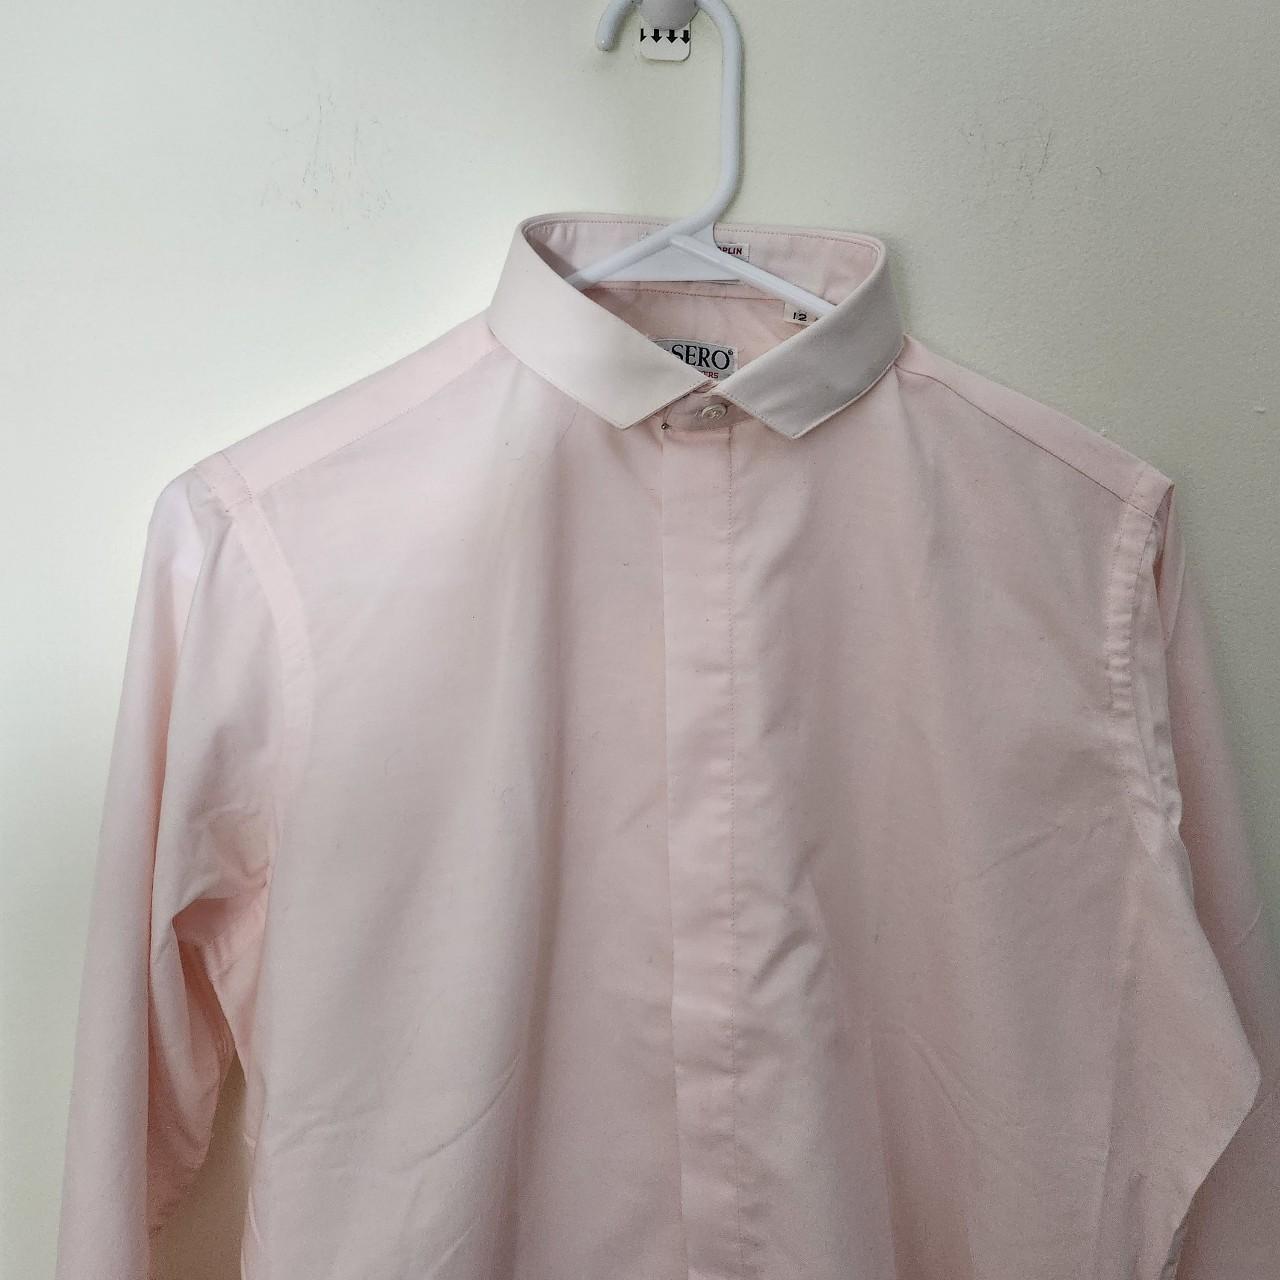 Sero Men's Casual Dress Shirt Button Up Long Sleeve White Red Striped Size  M | eBay